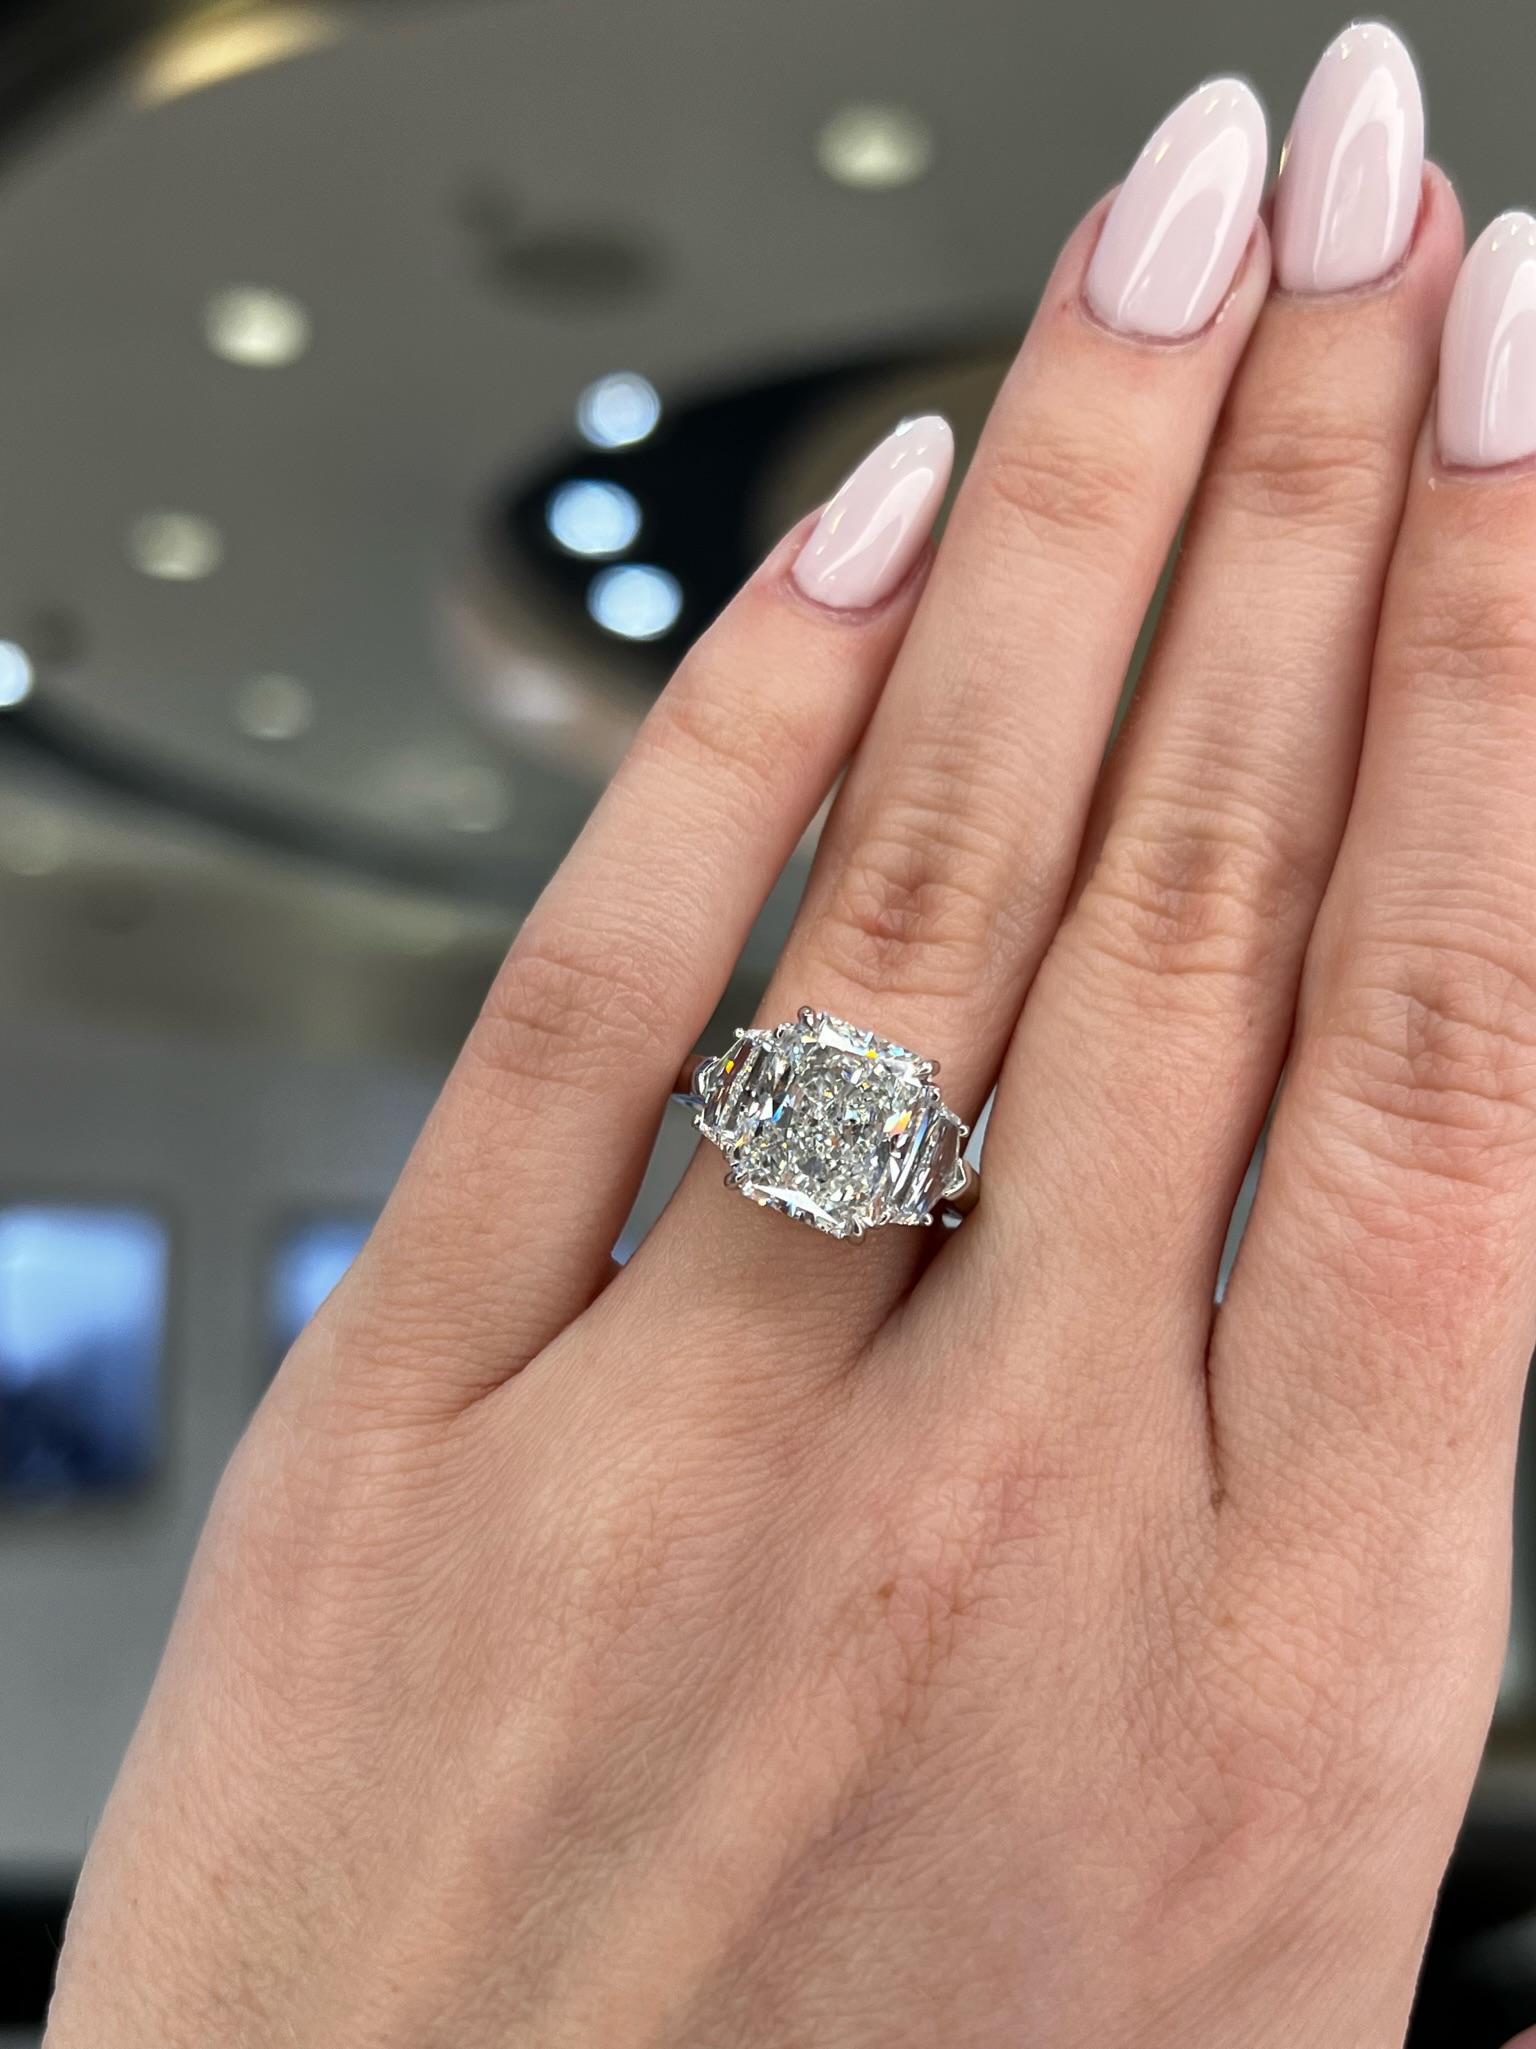 David Rosenberg 5.01 Carat Radiant Cut F SI1 GIA Diamond Engagement Ring For Sale 6